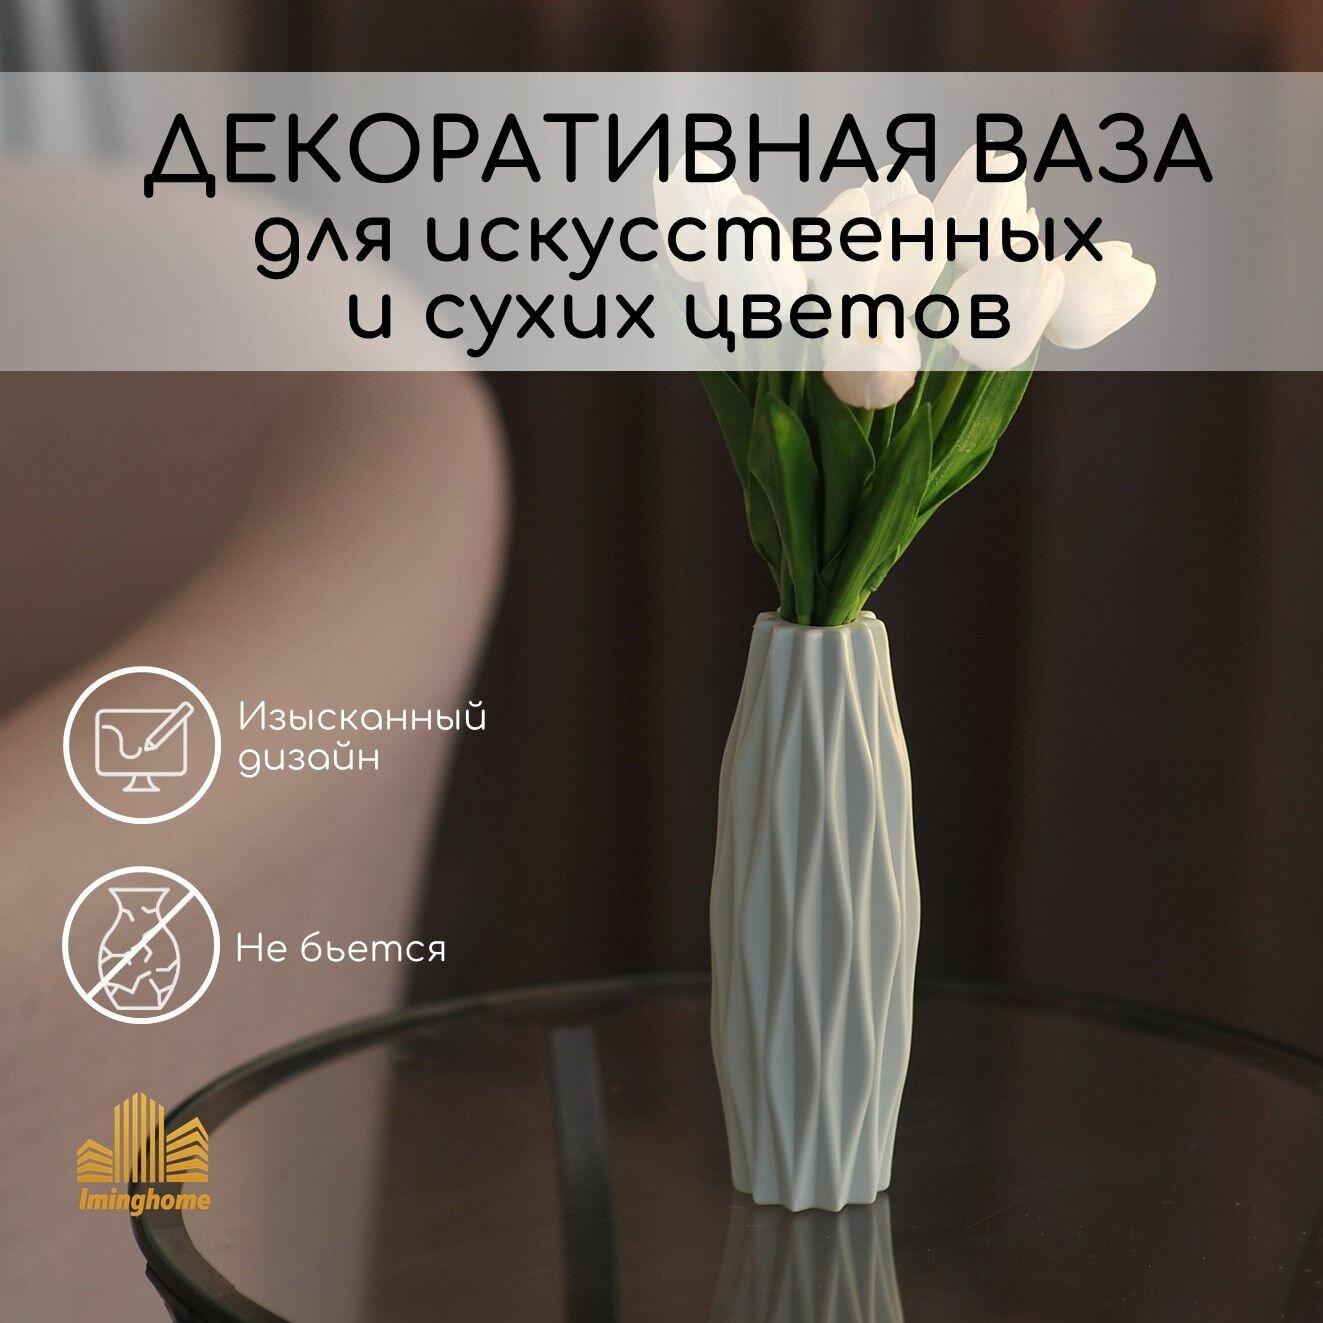 "Бирюзовая узкая ваза для сухоцветов" от бренда Iminghome